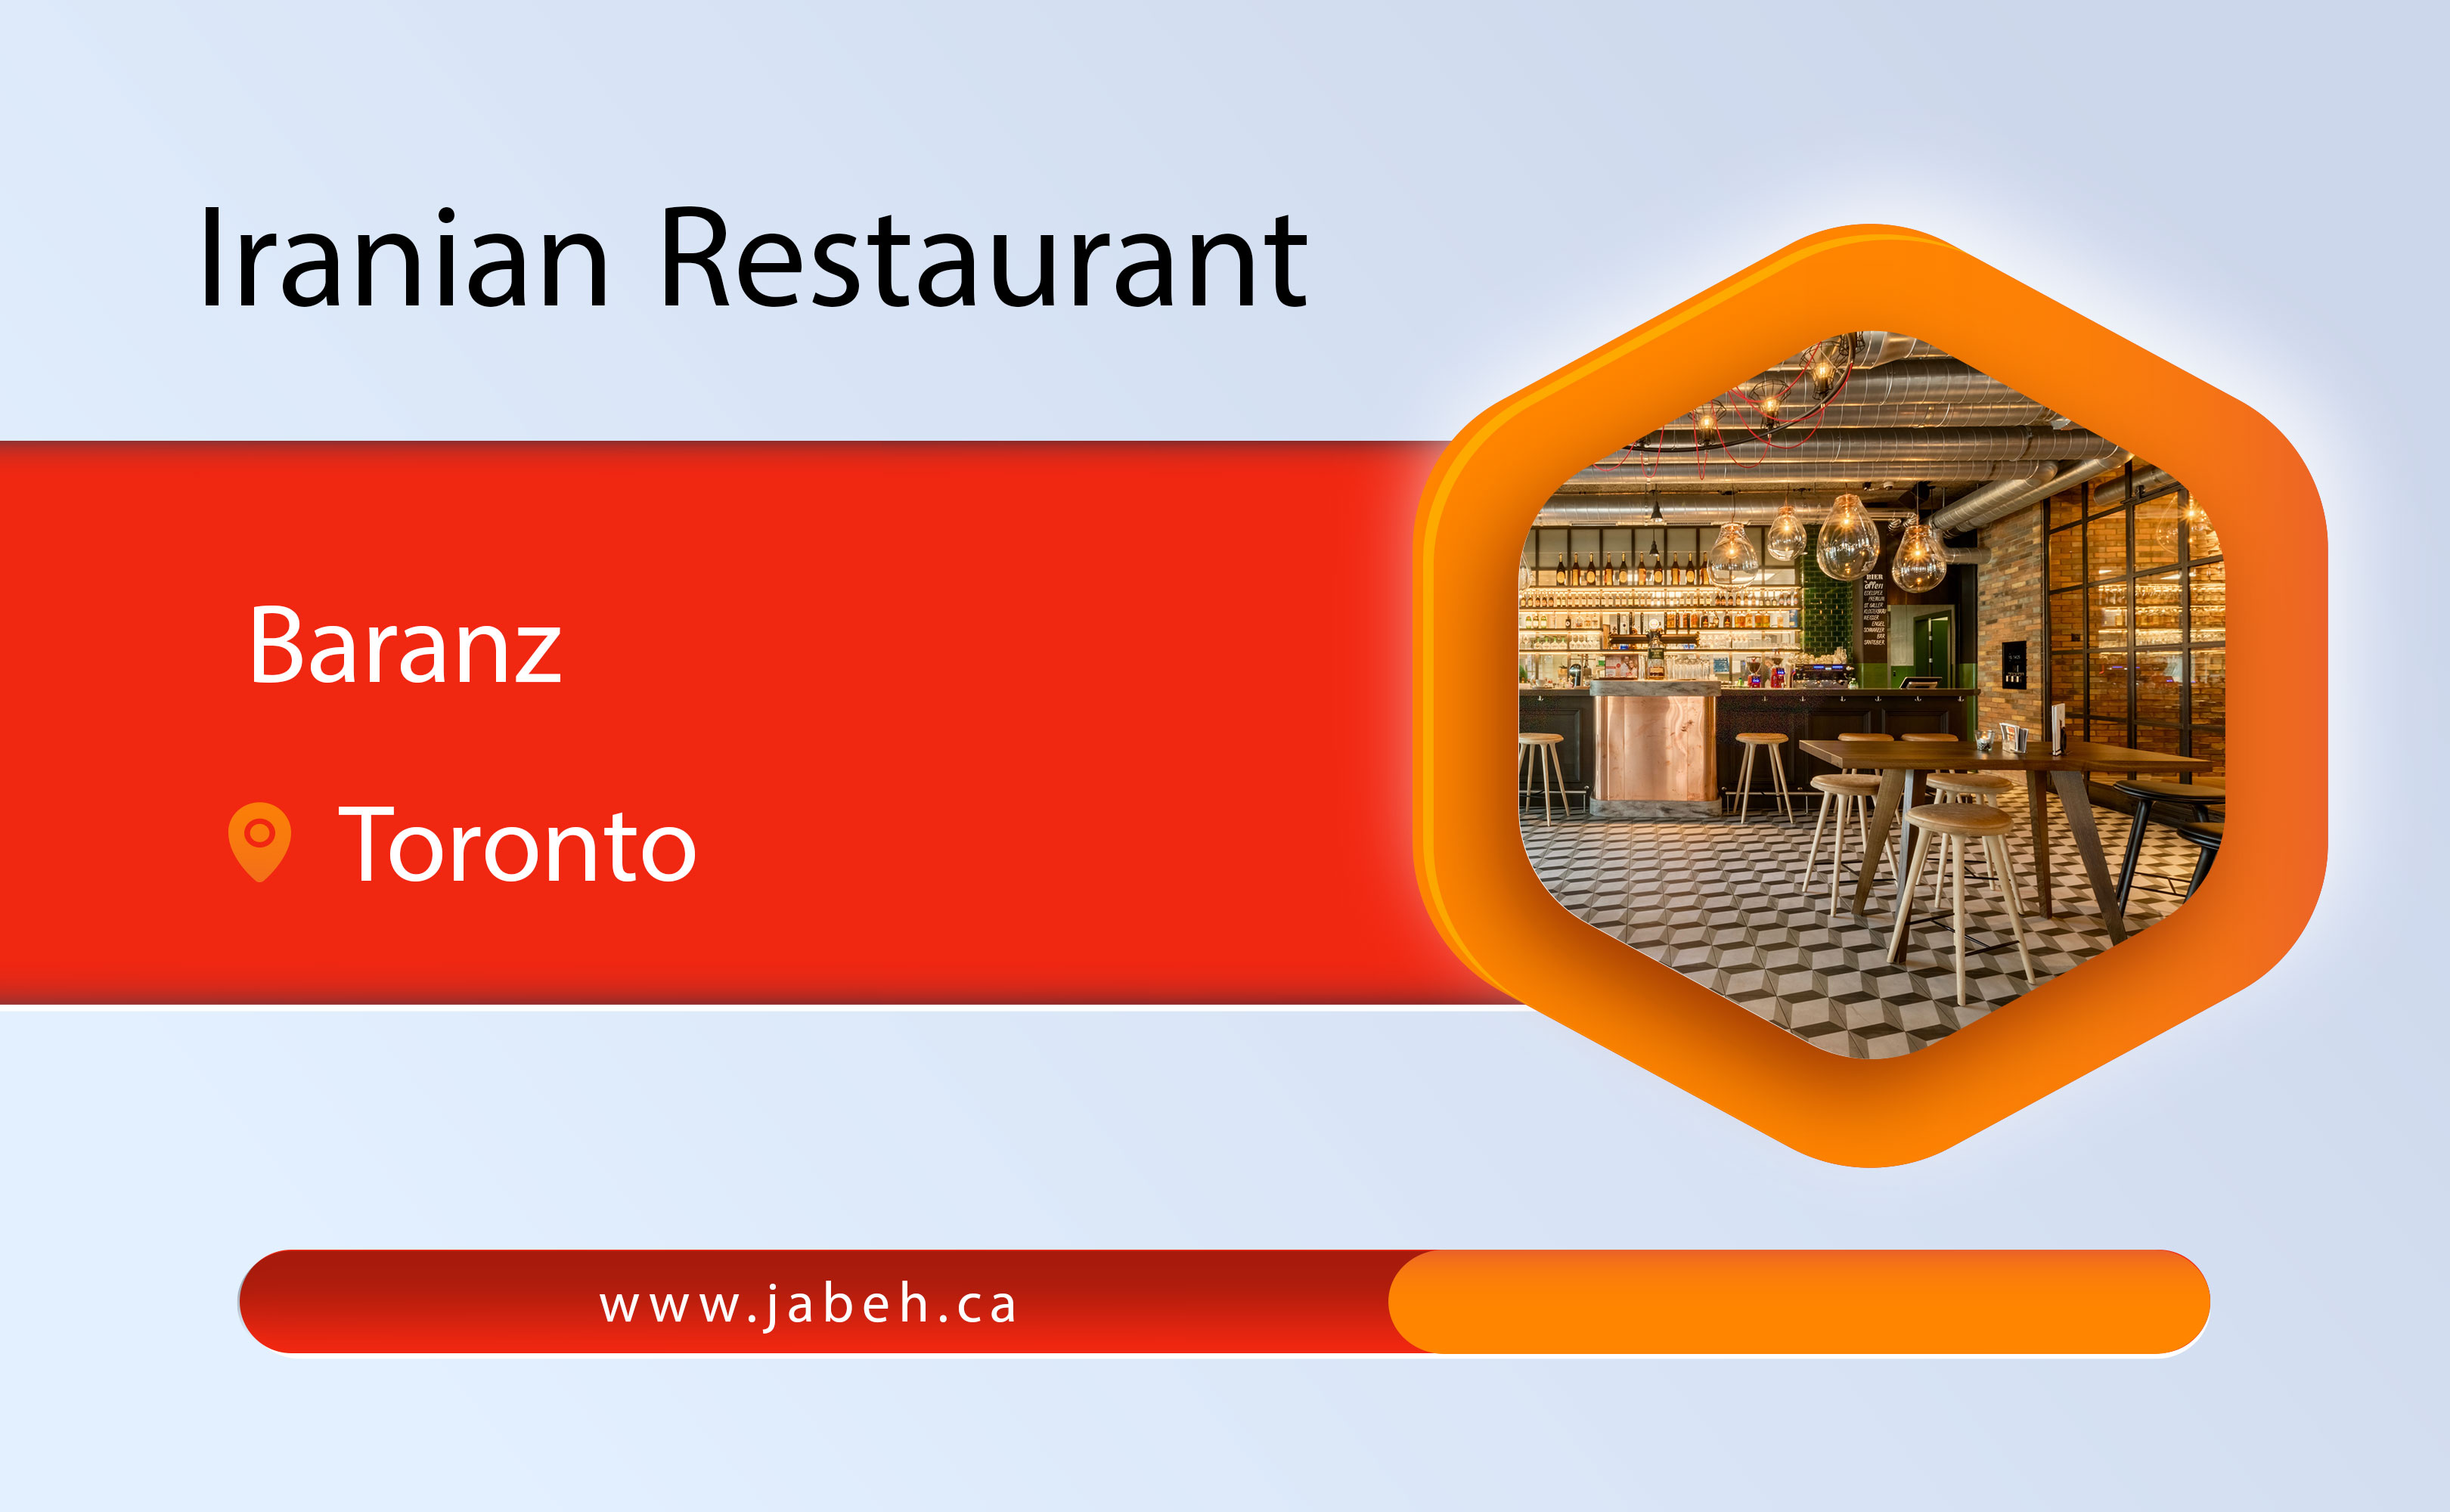 Baranz Iranian restaurant in Toronto